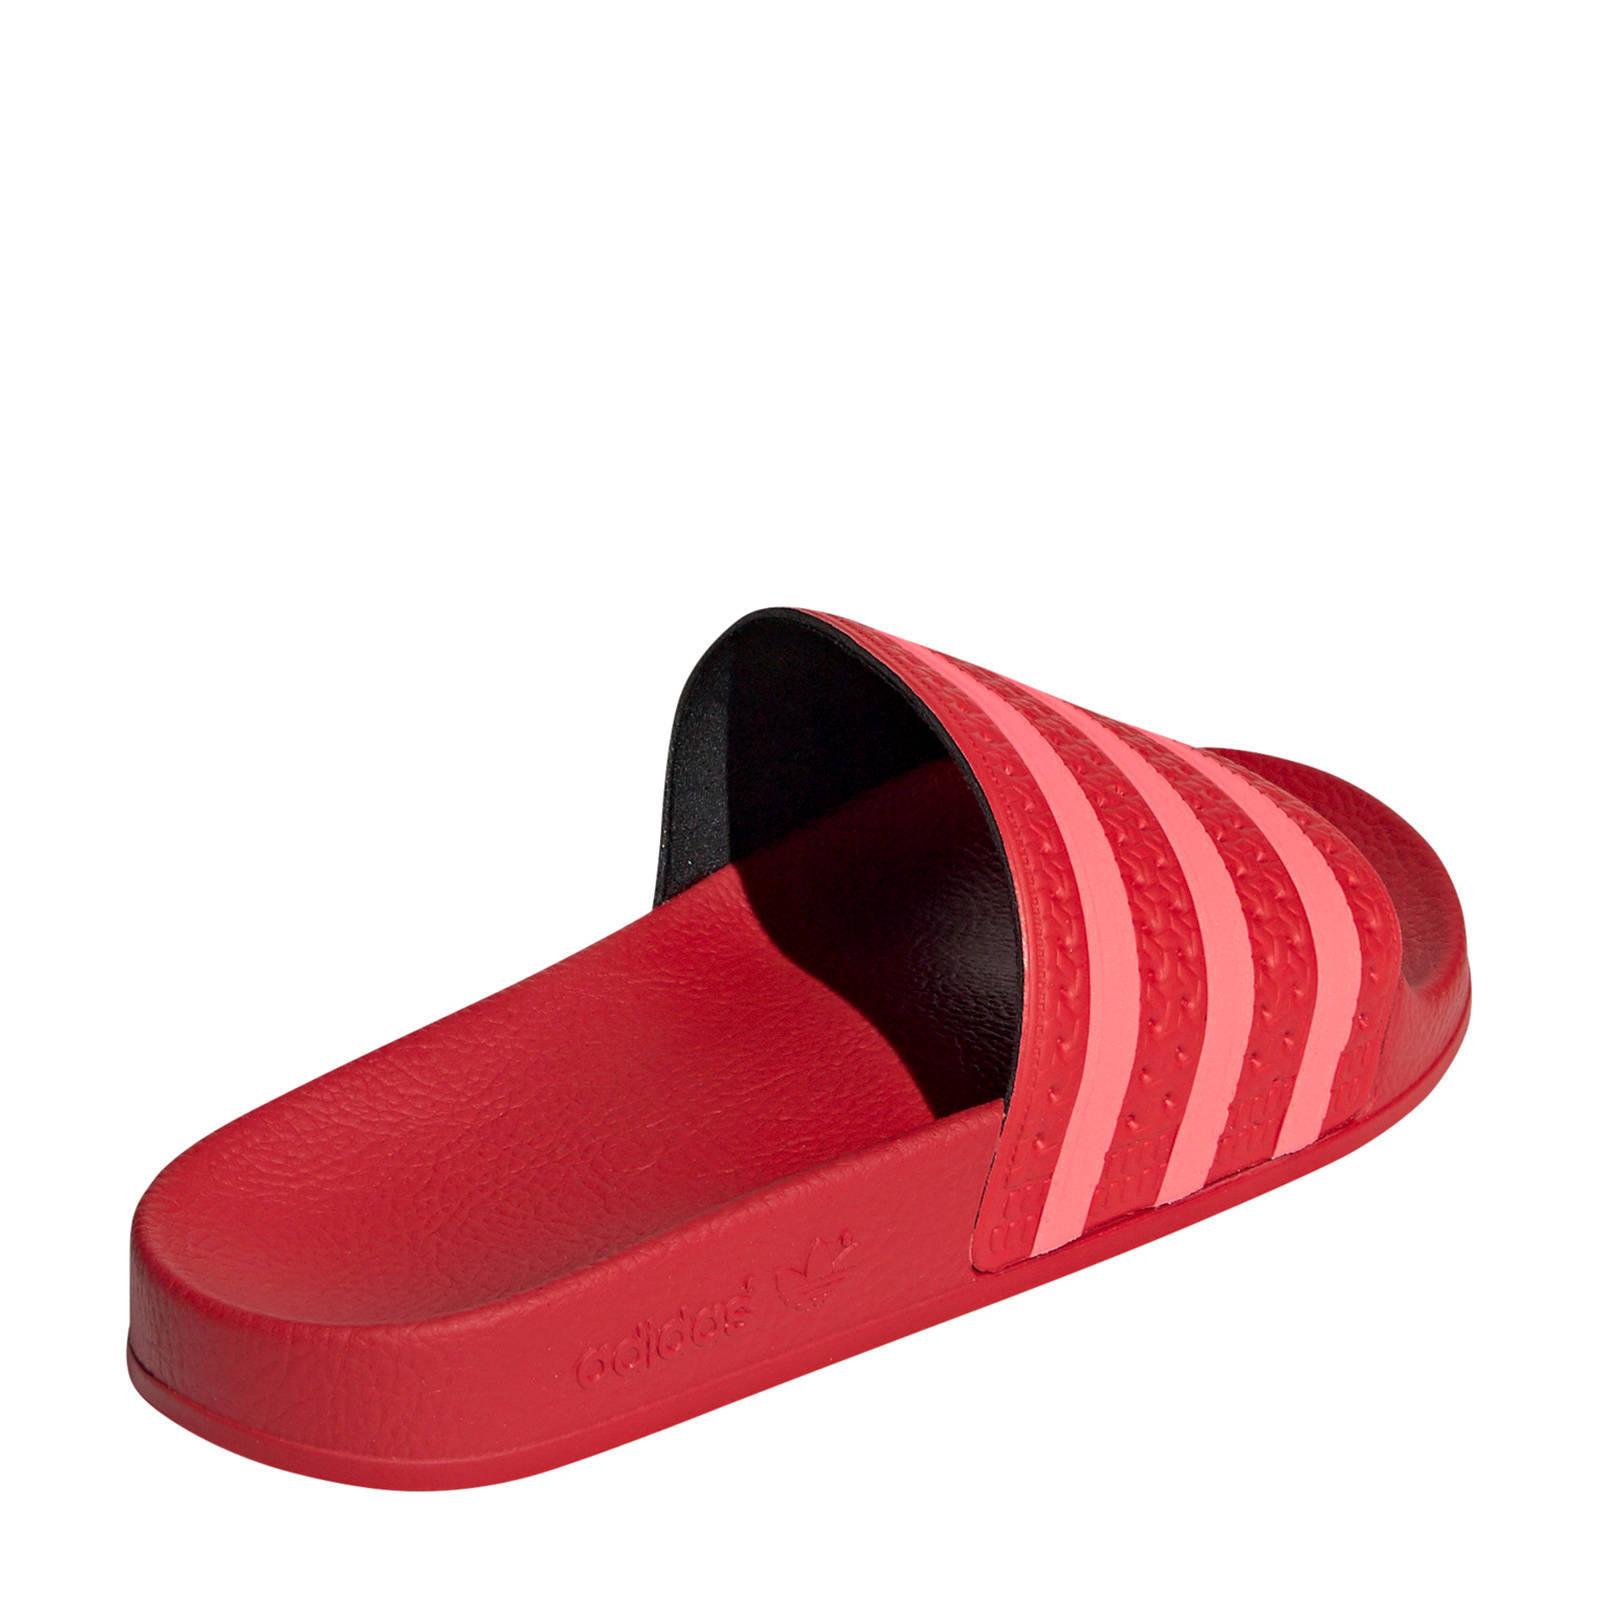 rode adilette slippers Off 61% - www.bashhguidelines.org